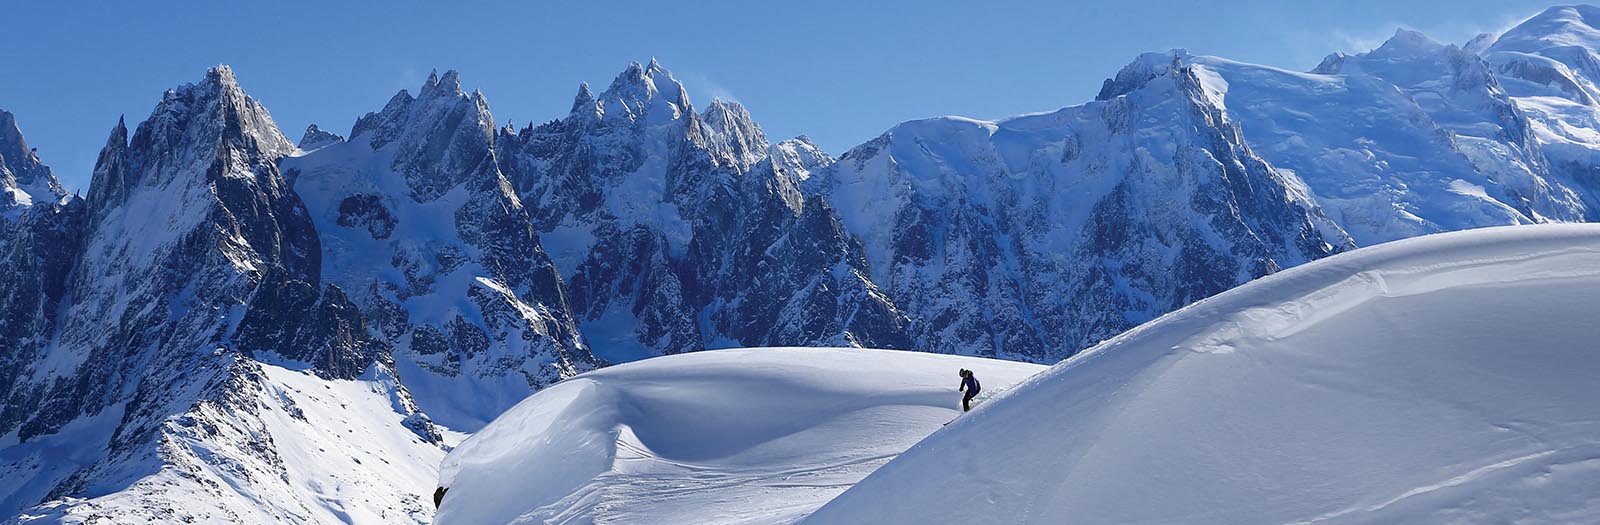 french ski vacations, european ski vacations, french alps ski resorts, french ski resorts